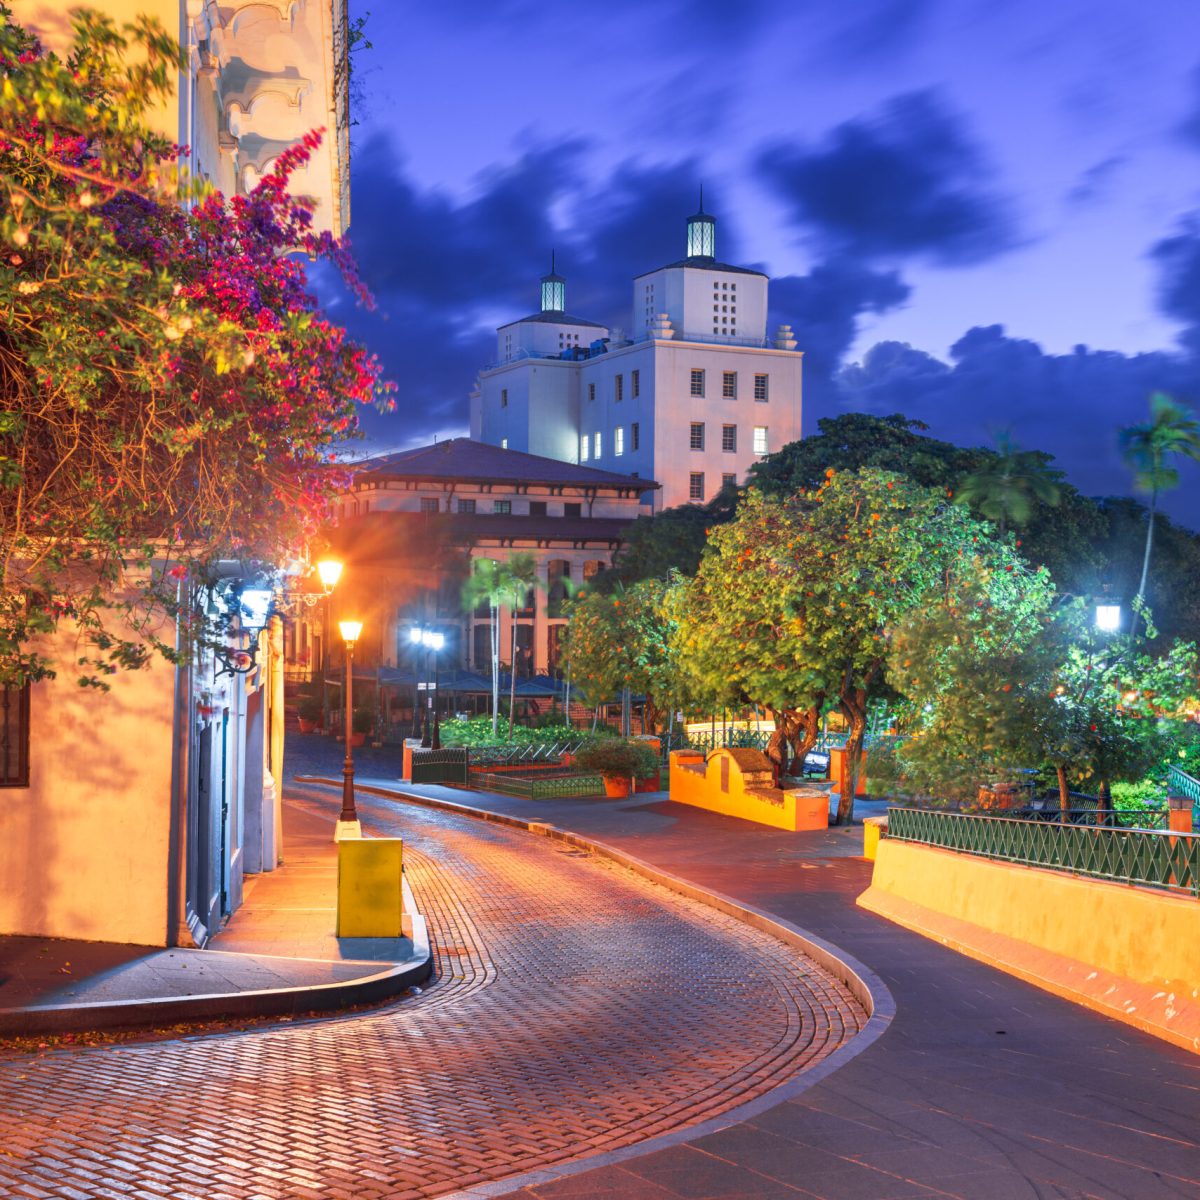 San Juan, Puerto Rico streets and cityscape at night.